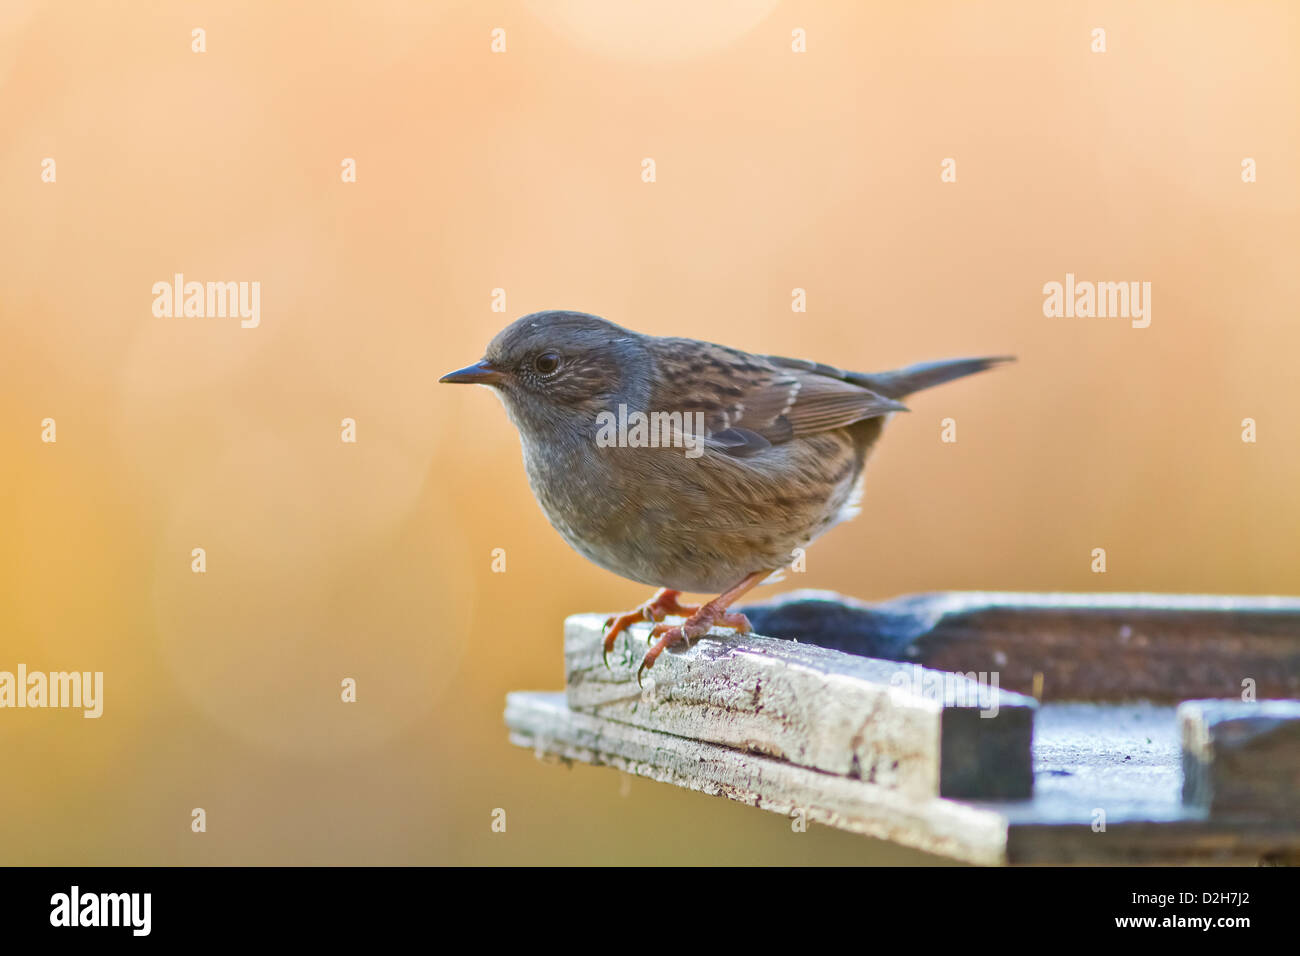 Hedge sparrow (dunnock) Foto Stock